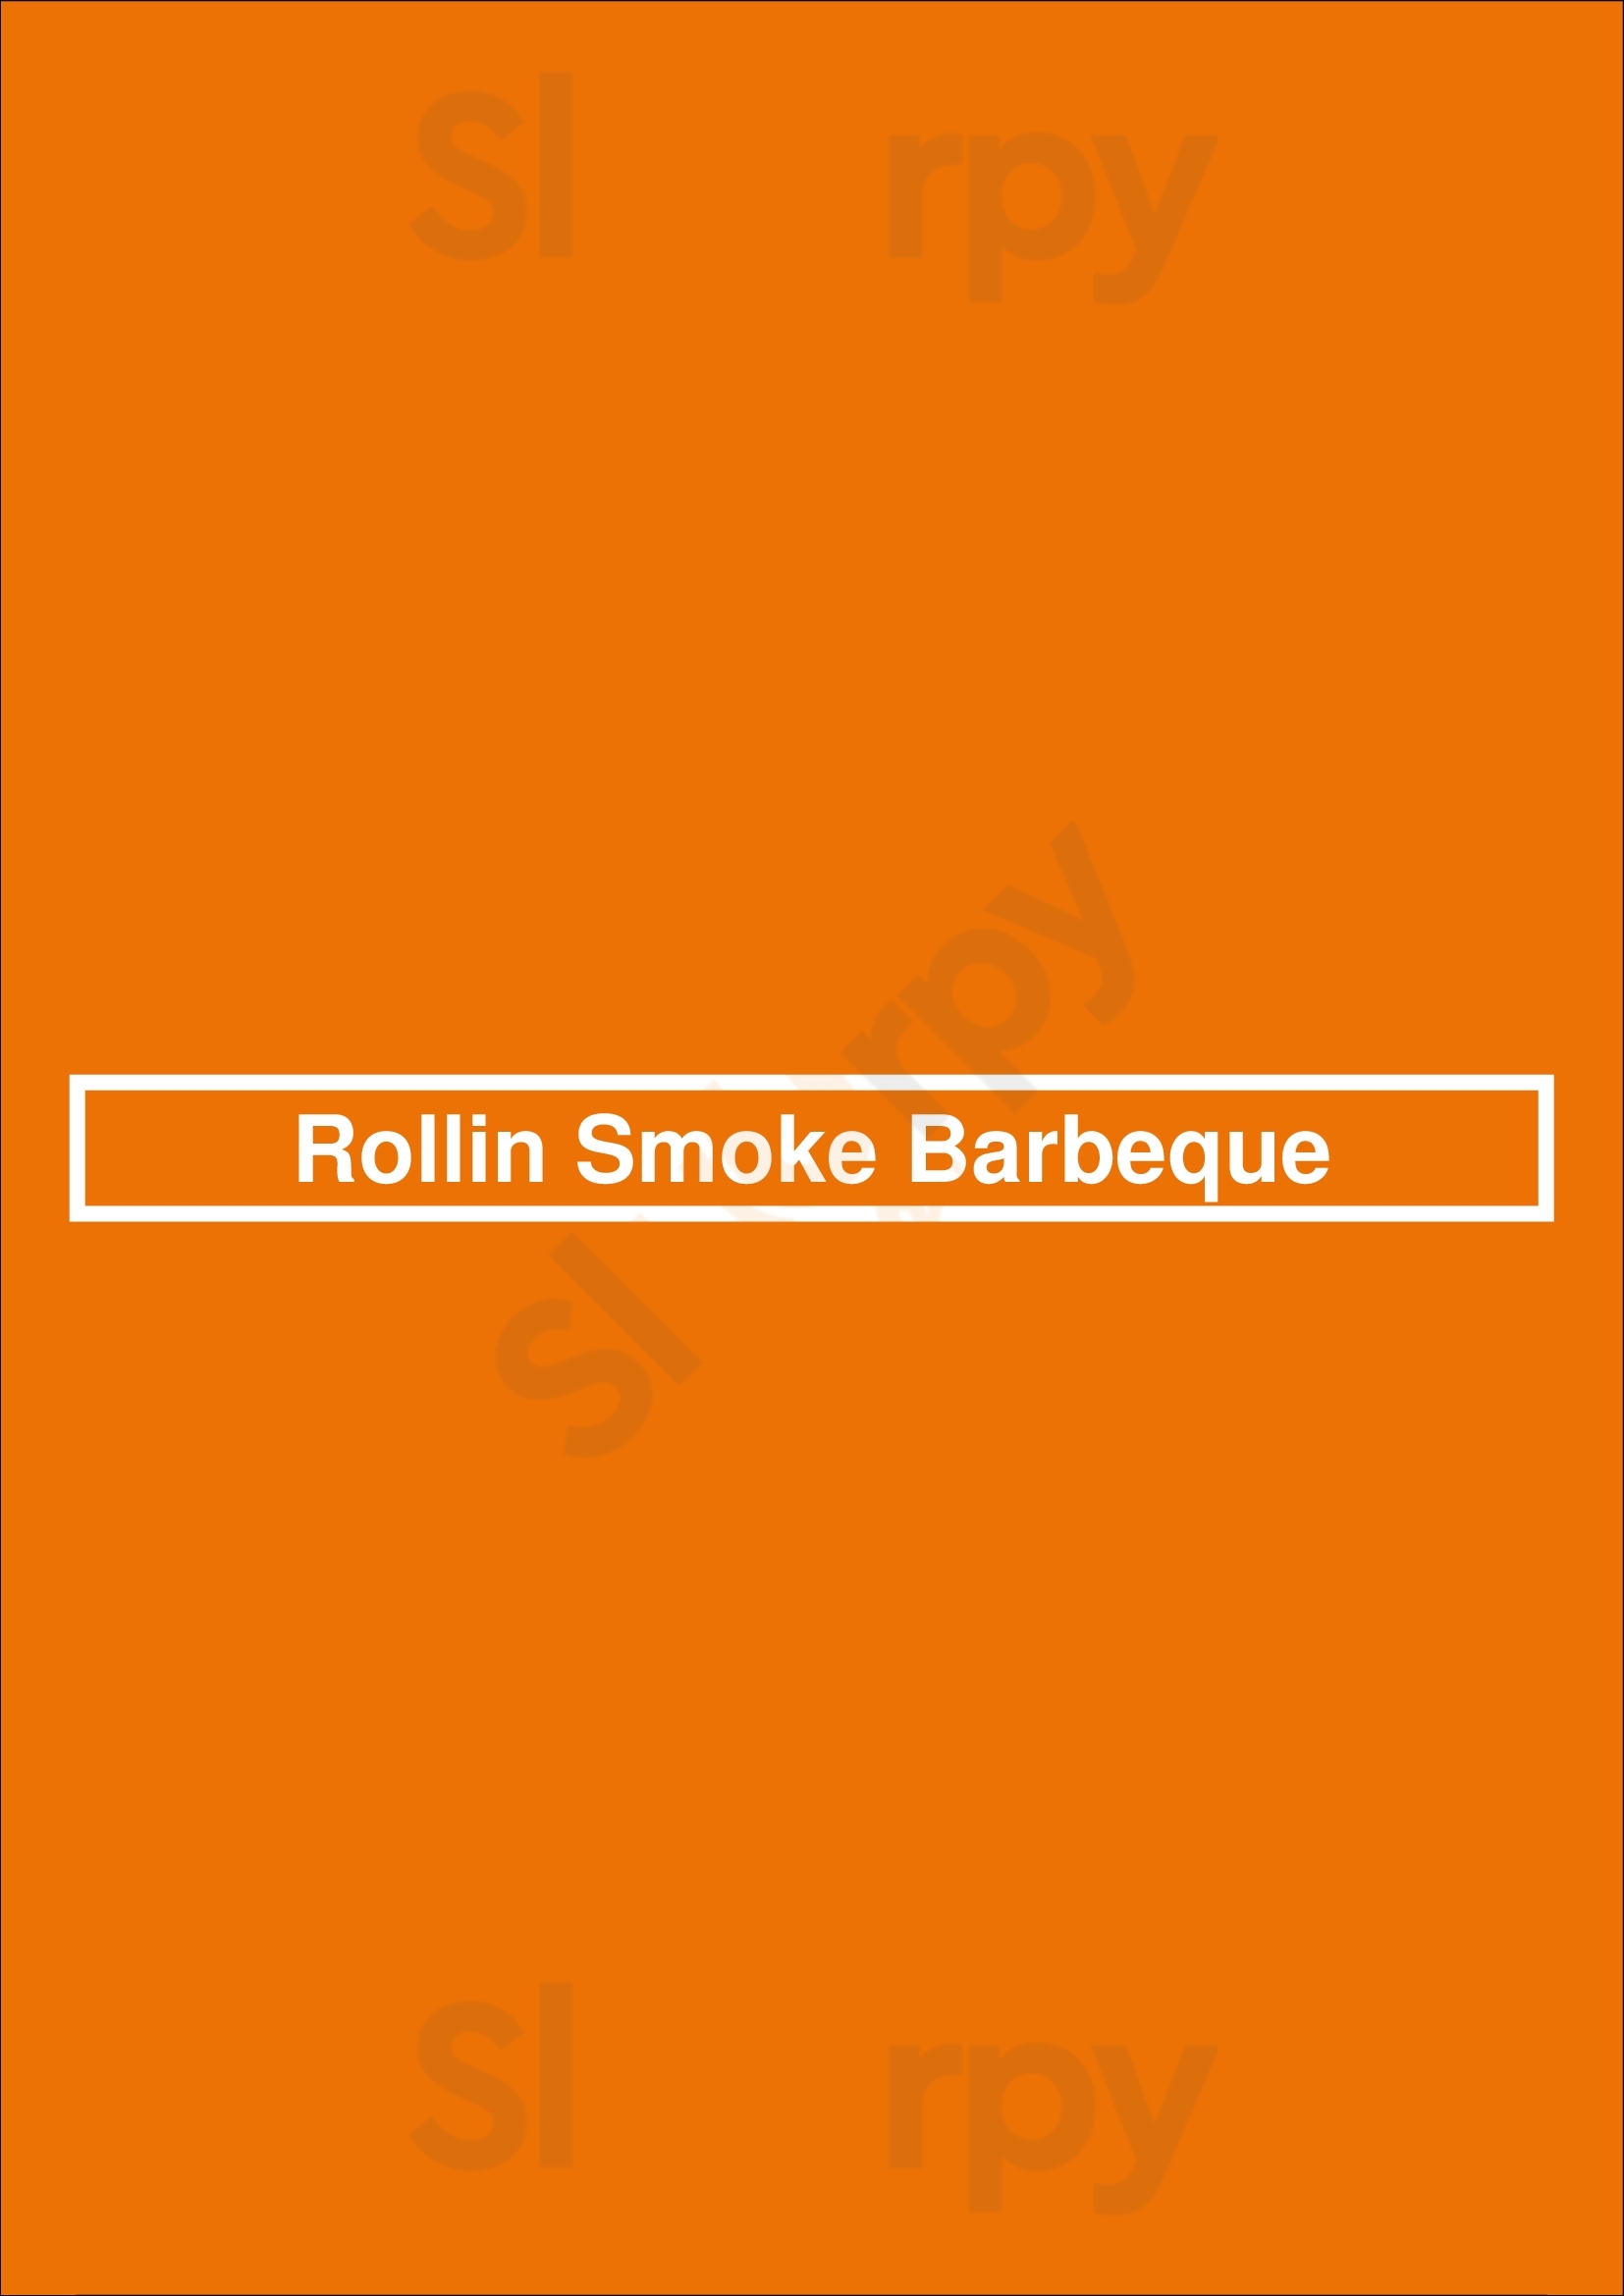 Rollin Smoke Barbeque Las Vegas Menu - 1